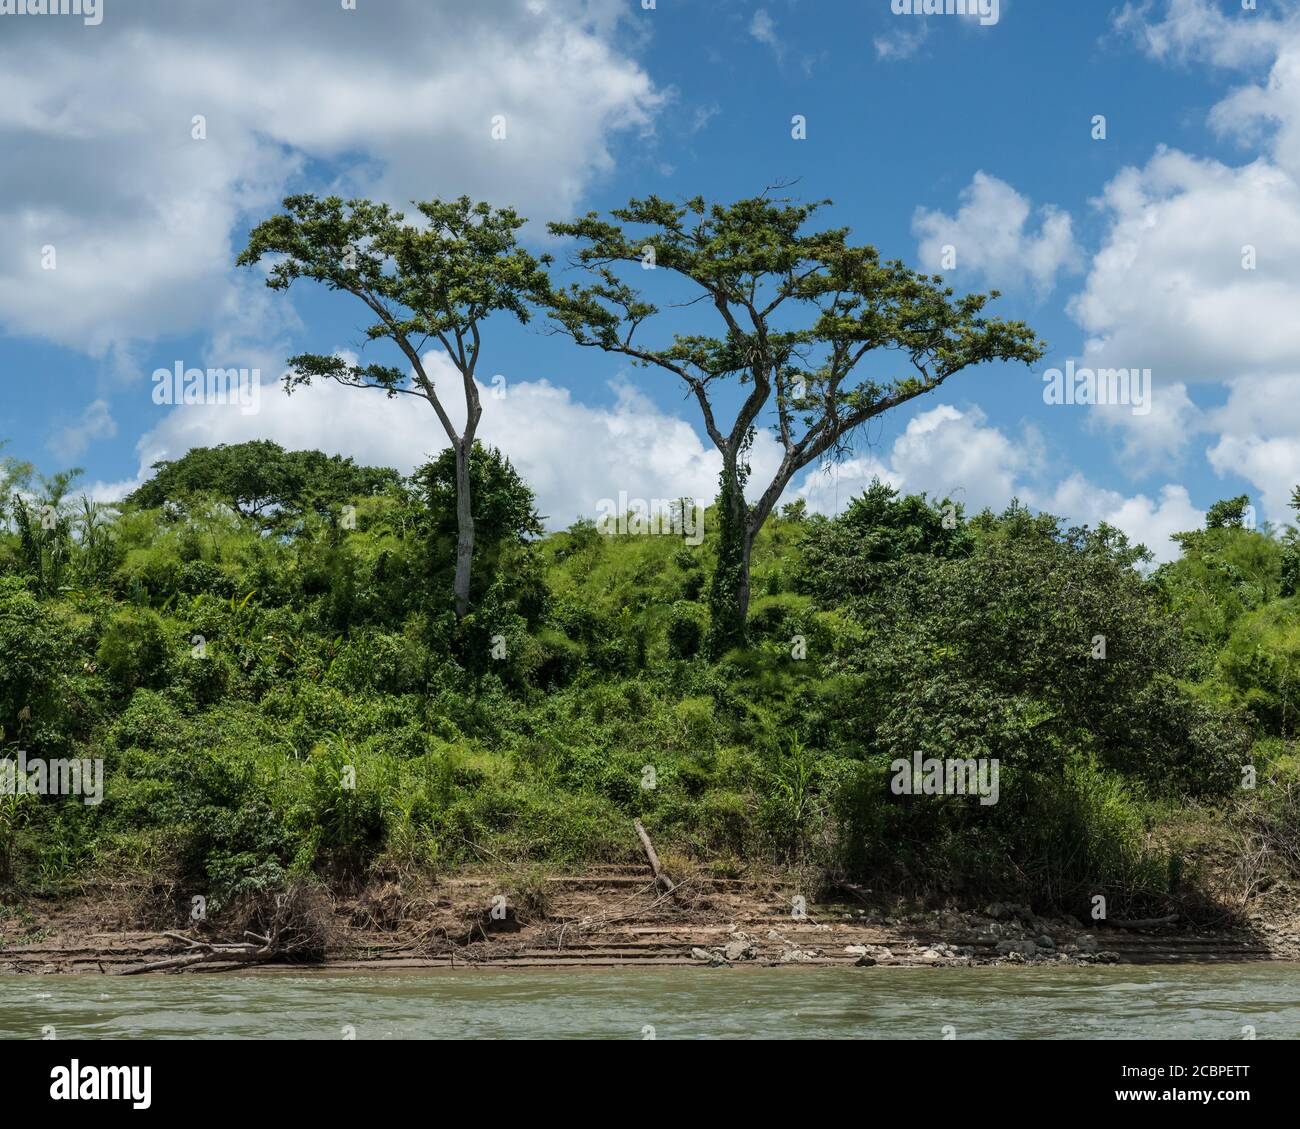 Two ceiba trees, the Tree of Life in Mayan mythology, on the Guatemalan shore of the Usumacinta River. Stock Photo